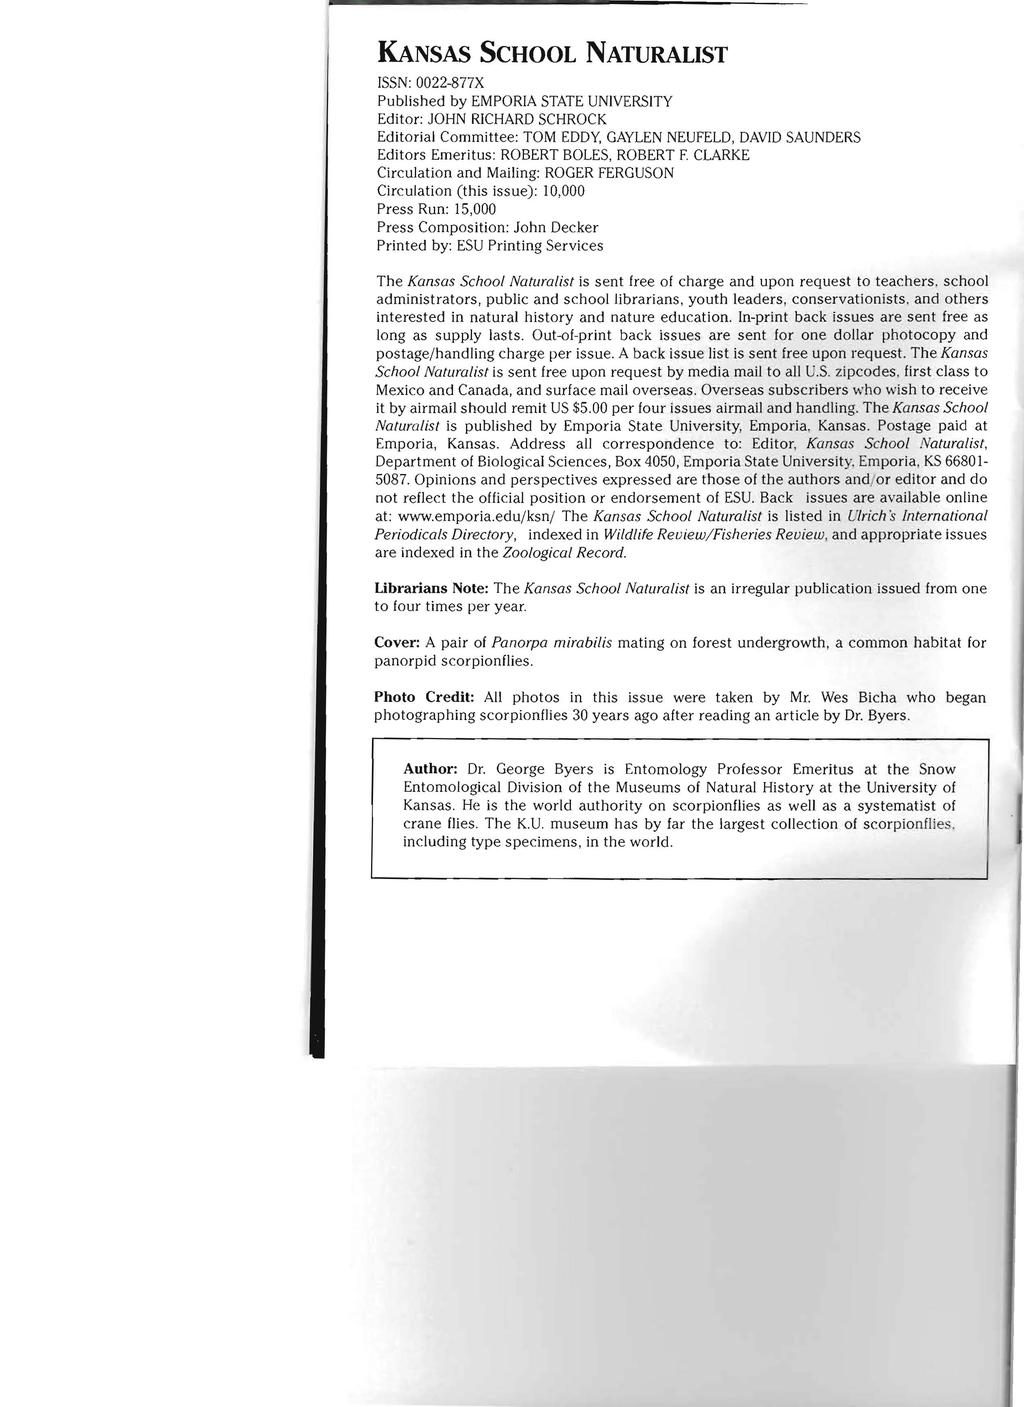 KANSAS SCHOOL NATURALIST ISSN: 0022-877X Published by EMPORIA STATE UNIVERSITY Editor: JOHN RICHARD SCHROCK Editorial Committee: TOM EDDY, GAYLEN NEUFELD, DAVID SAUNDERS Editors Emeritus: ROBERT